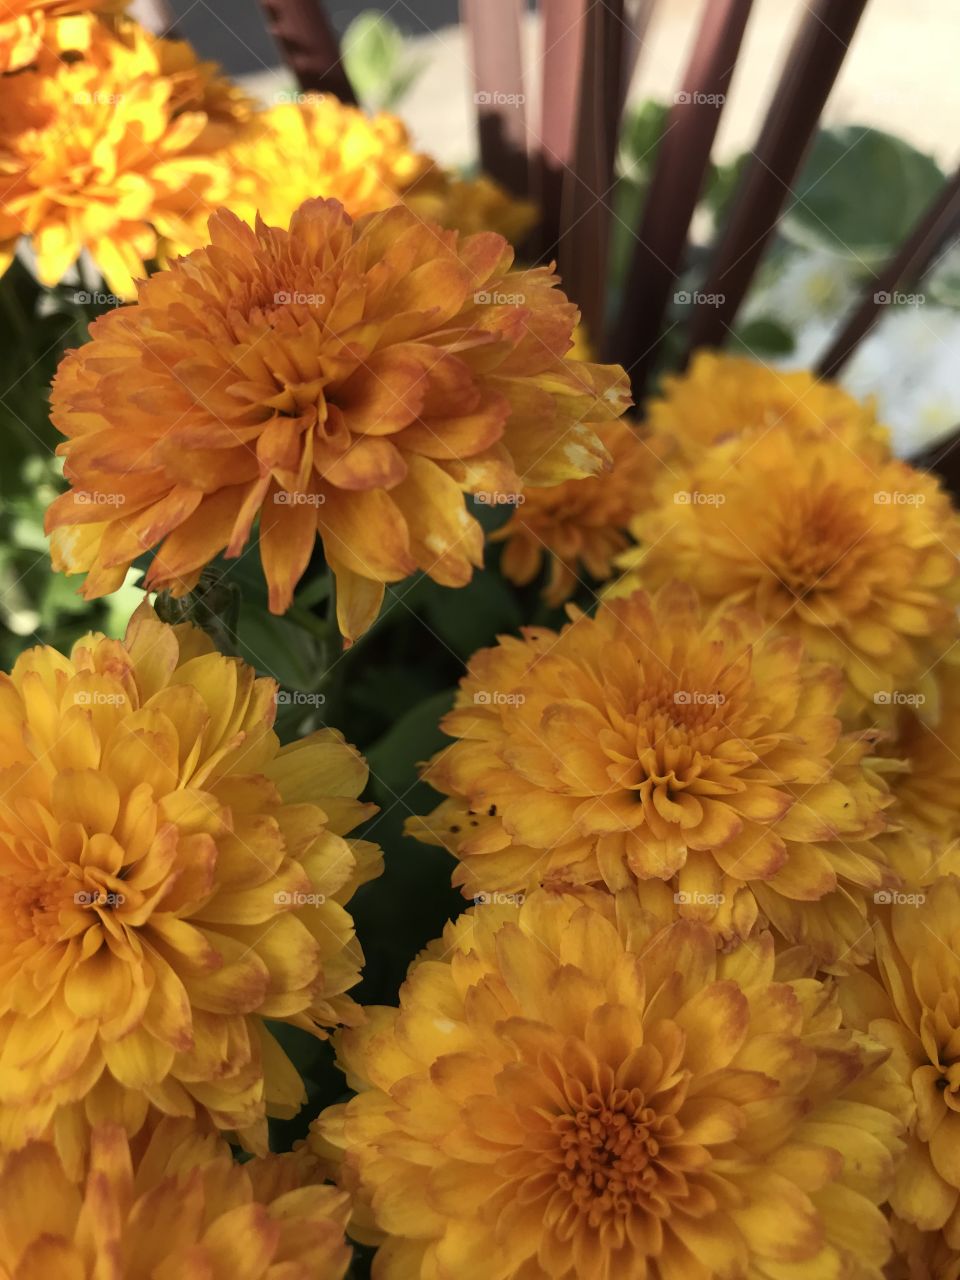 Fall flowers